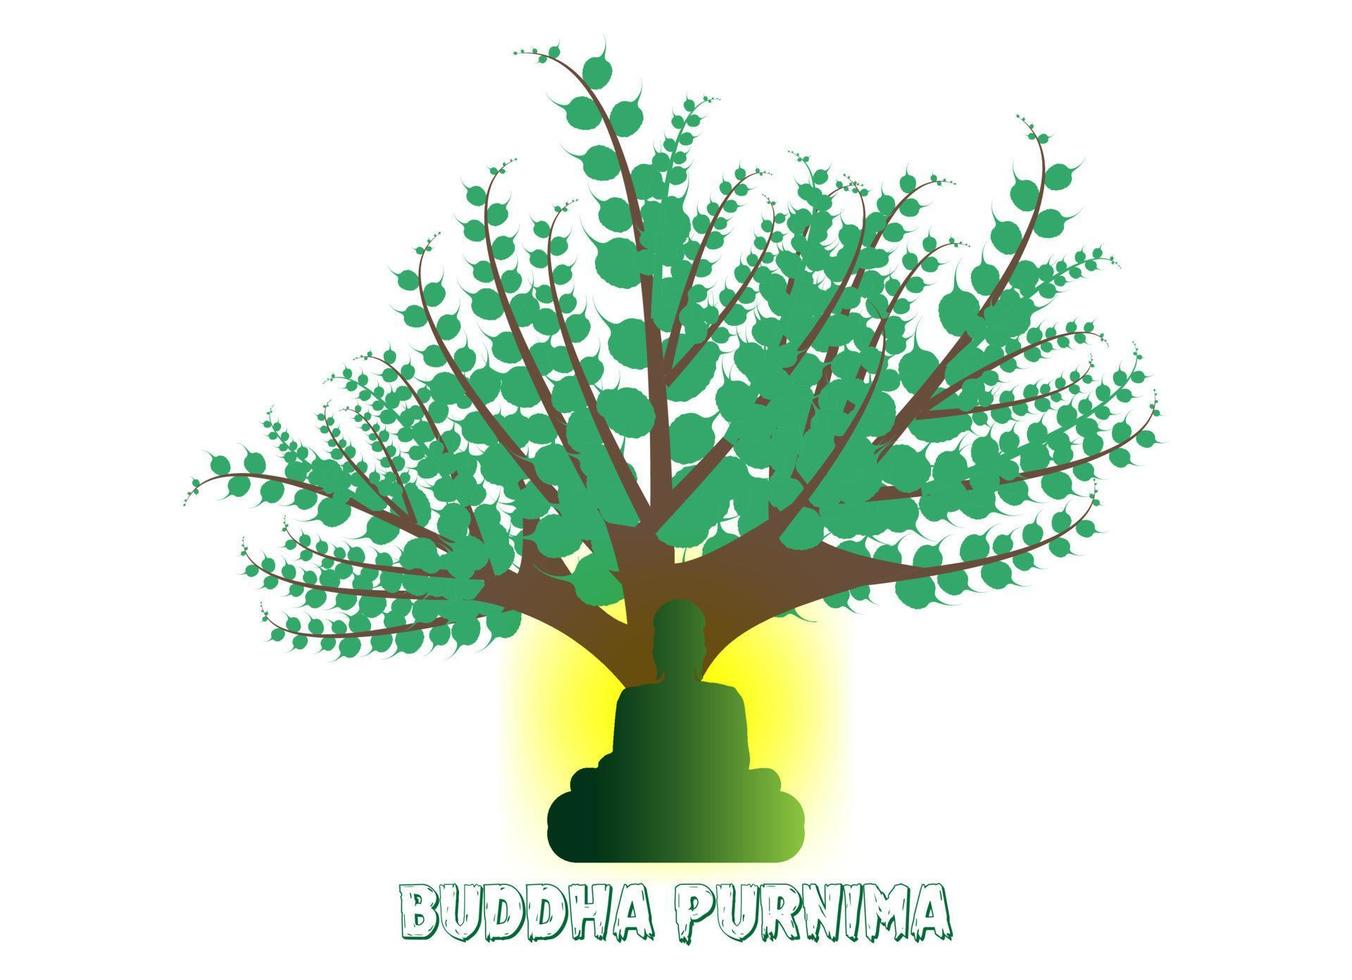 vetor ilustração do Buda purnima